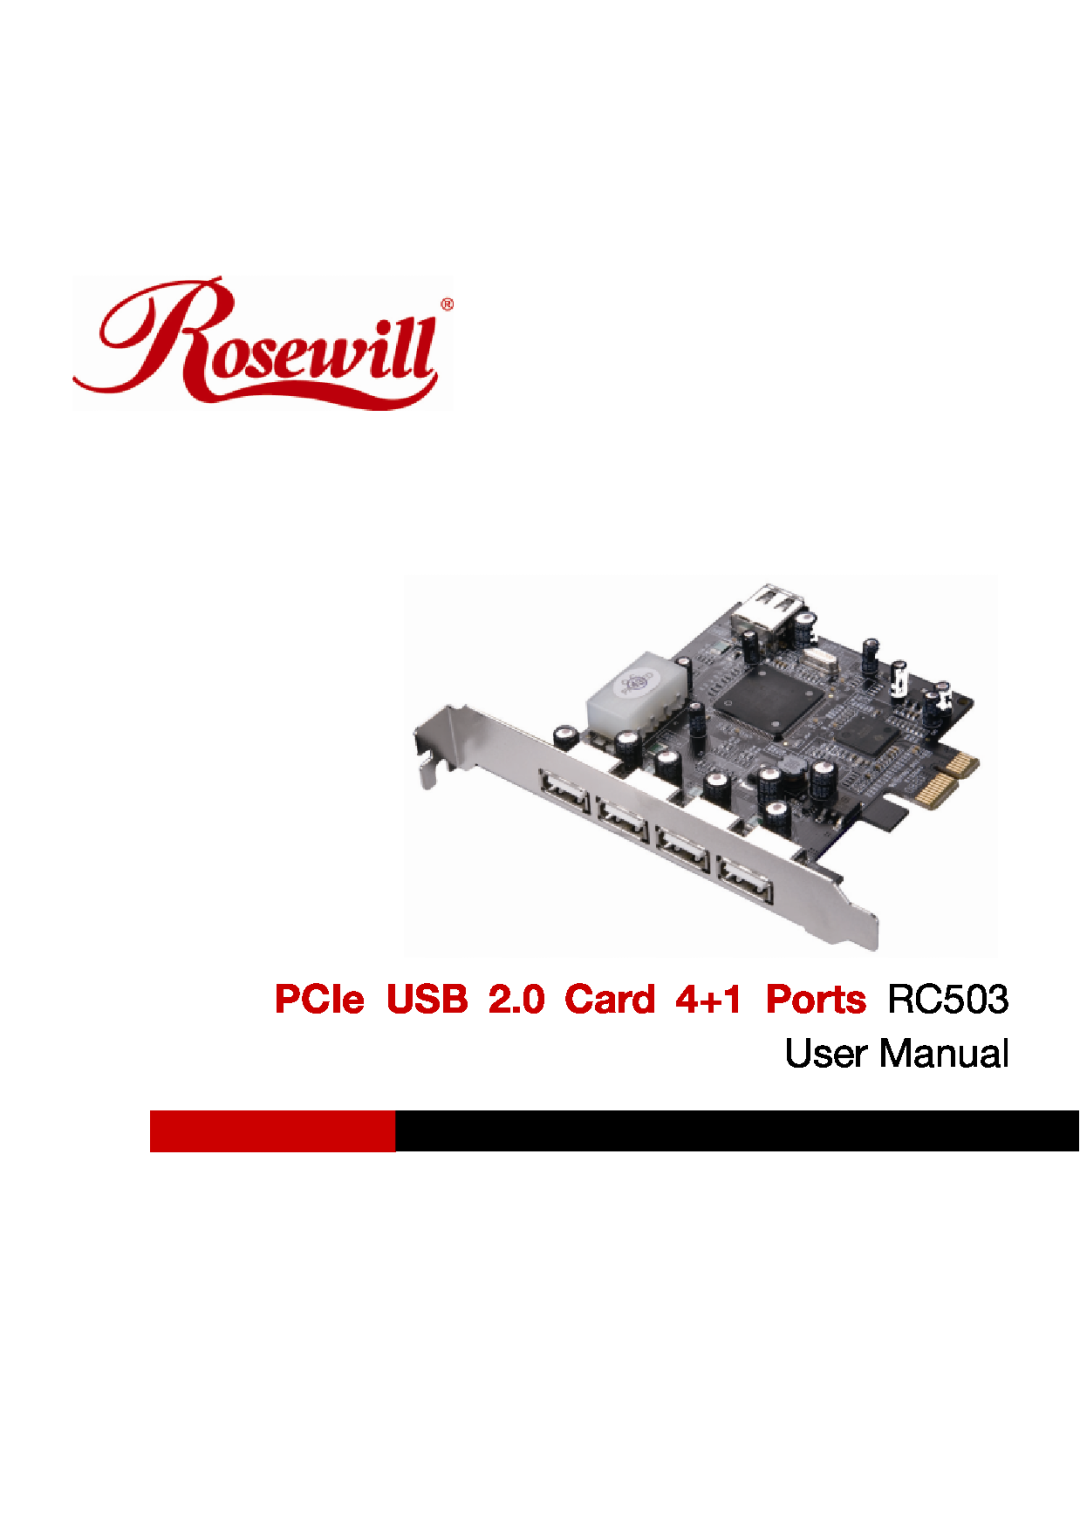 Rosewill user manual PCIe USB 2.0 Card 4+1 Ports RC503, User Manual 